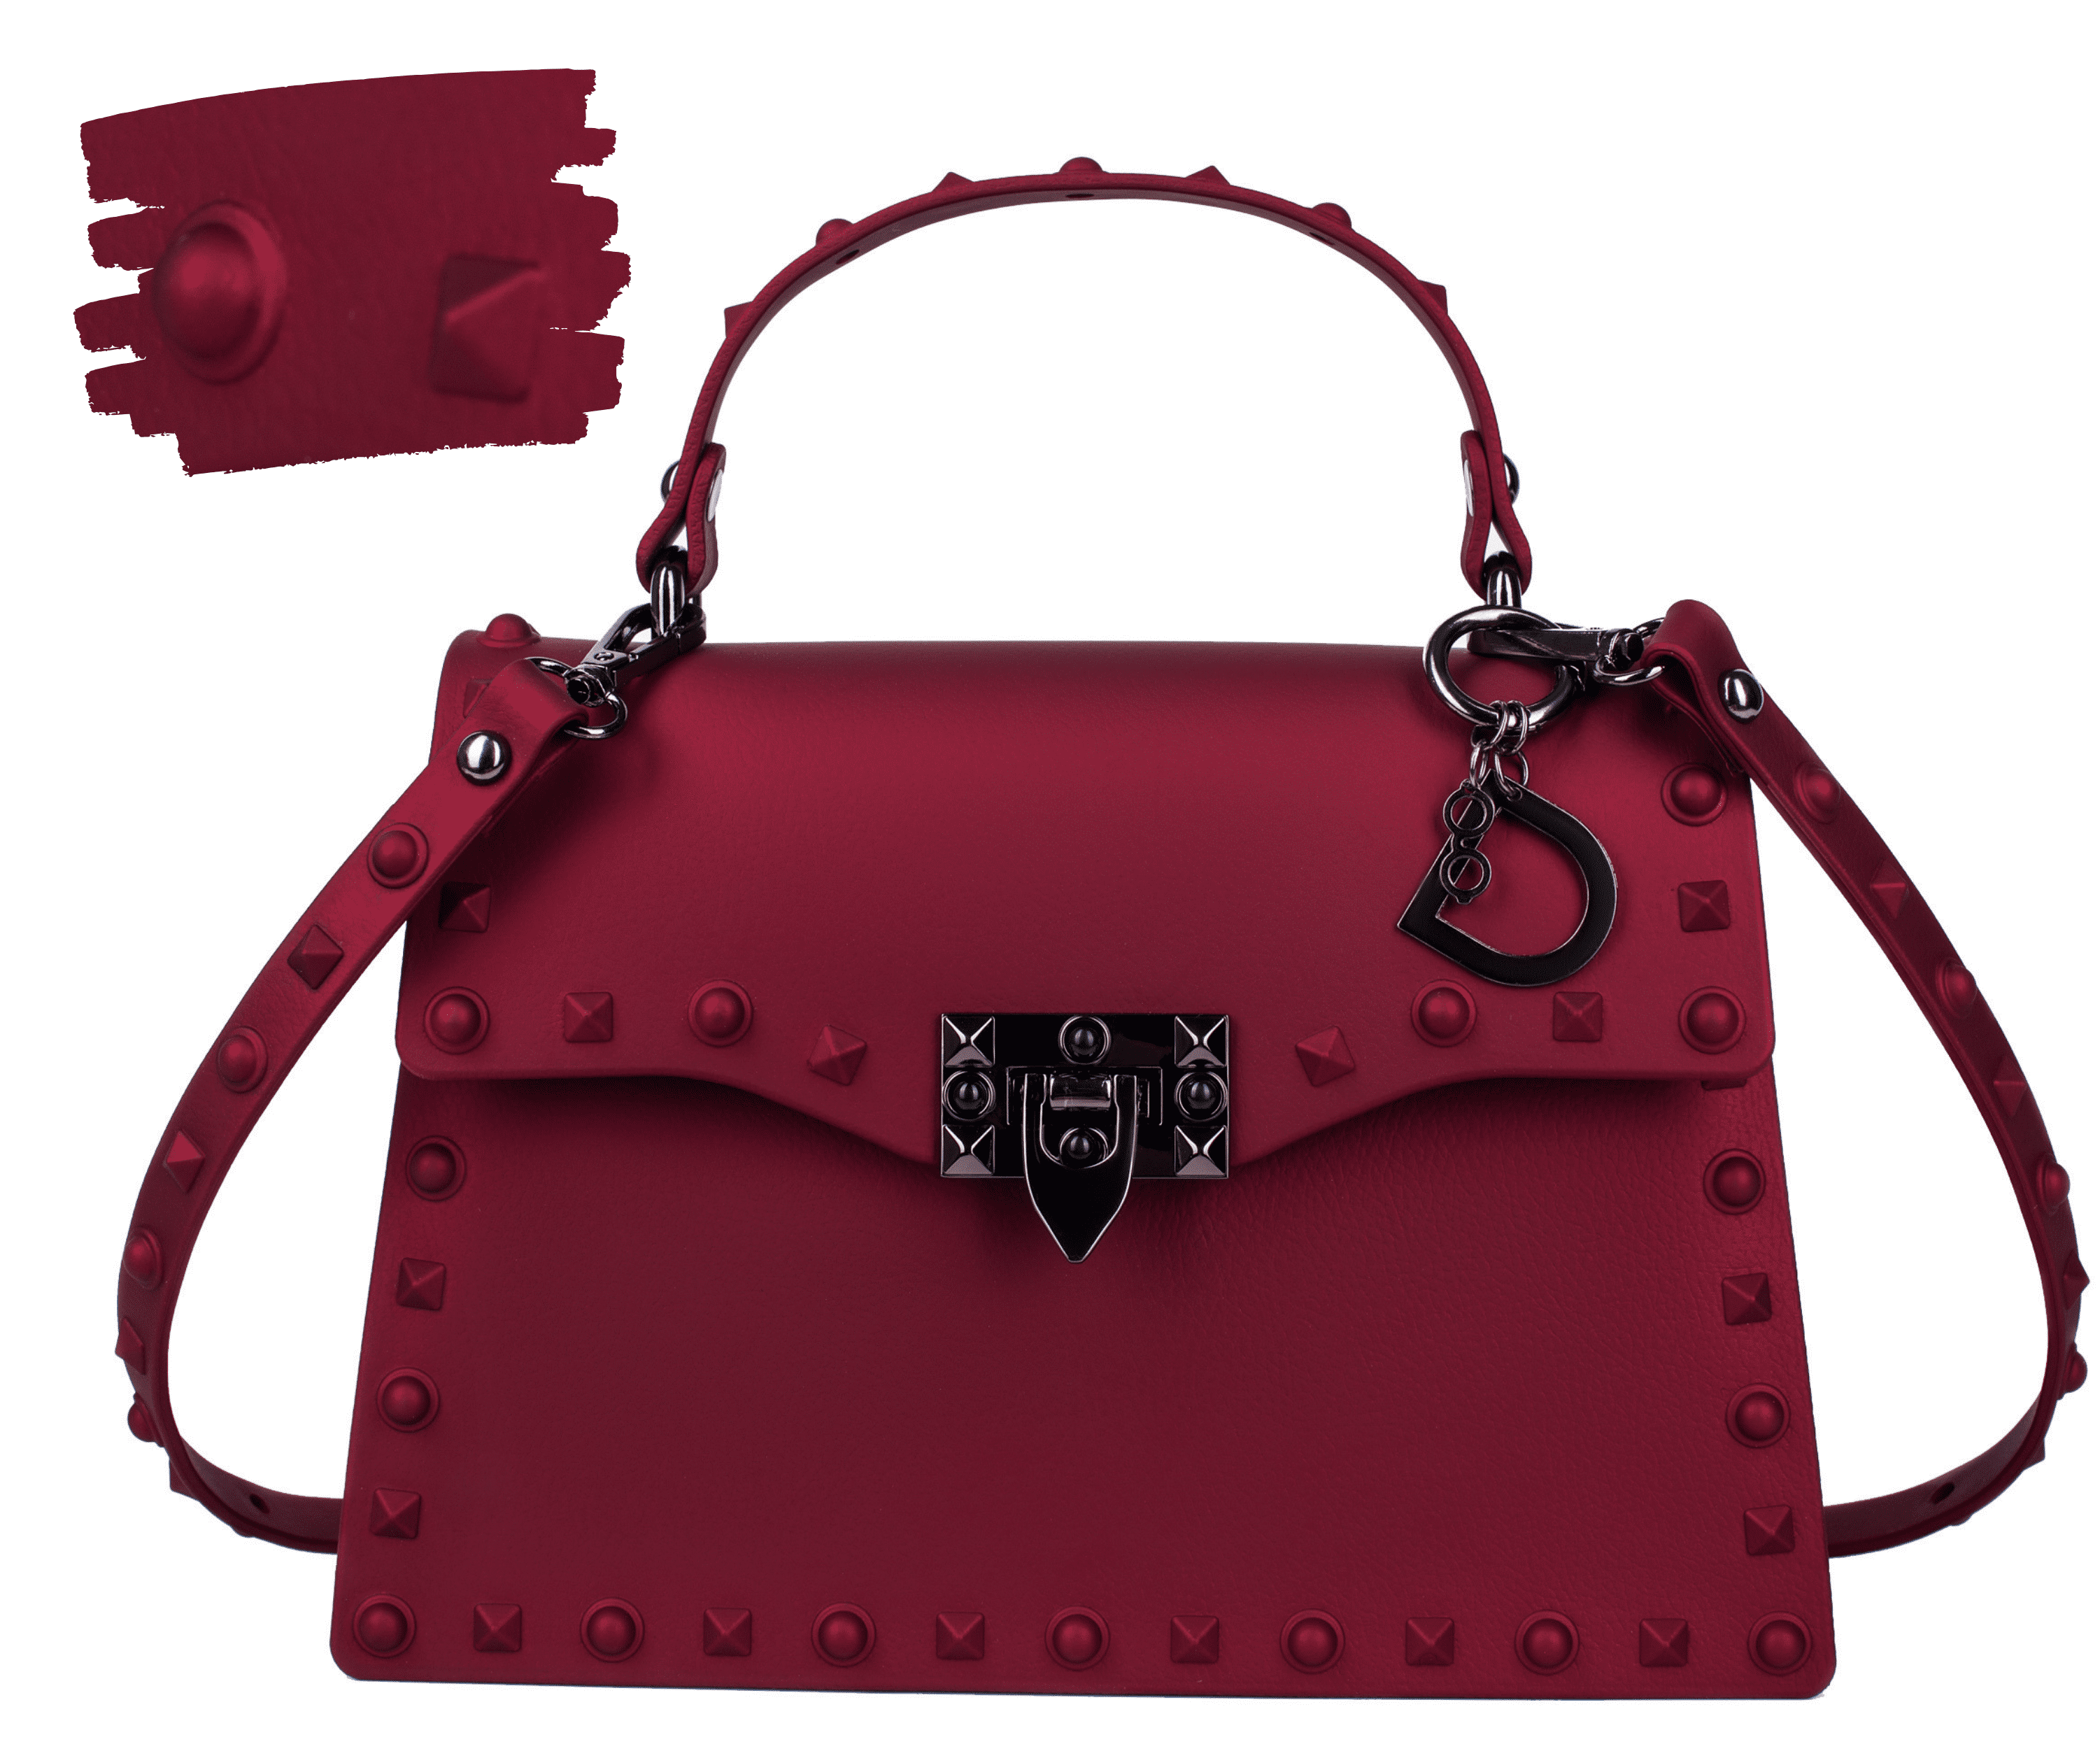 DASTI - DASTI Studded womens purses and handbags Crossbody Bags for Women Medium Size Red ...